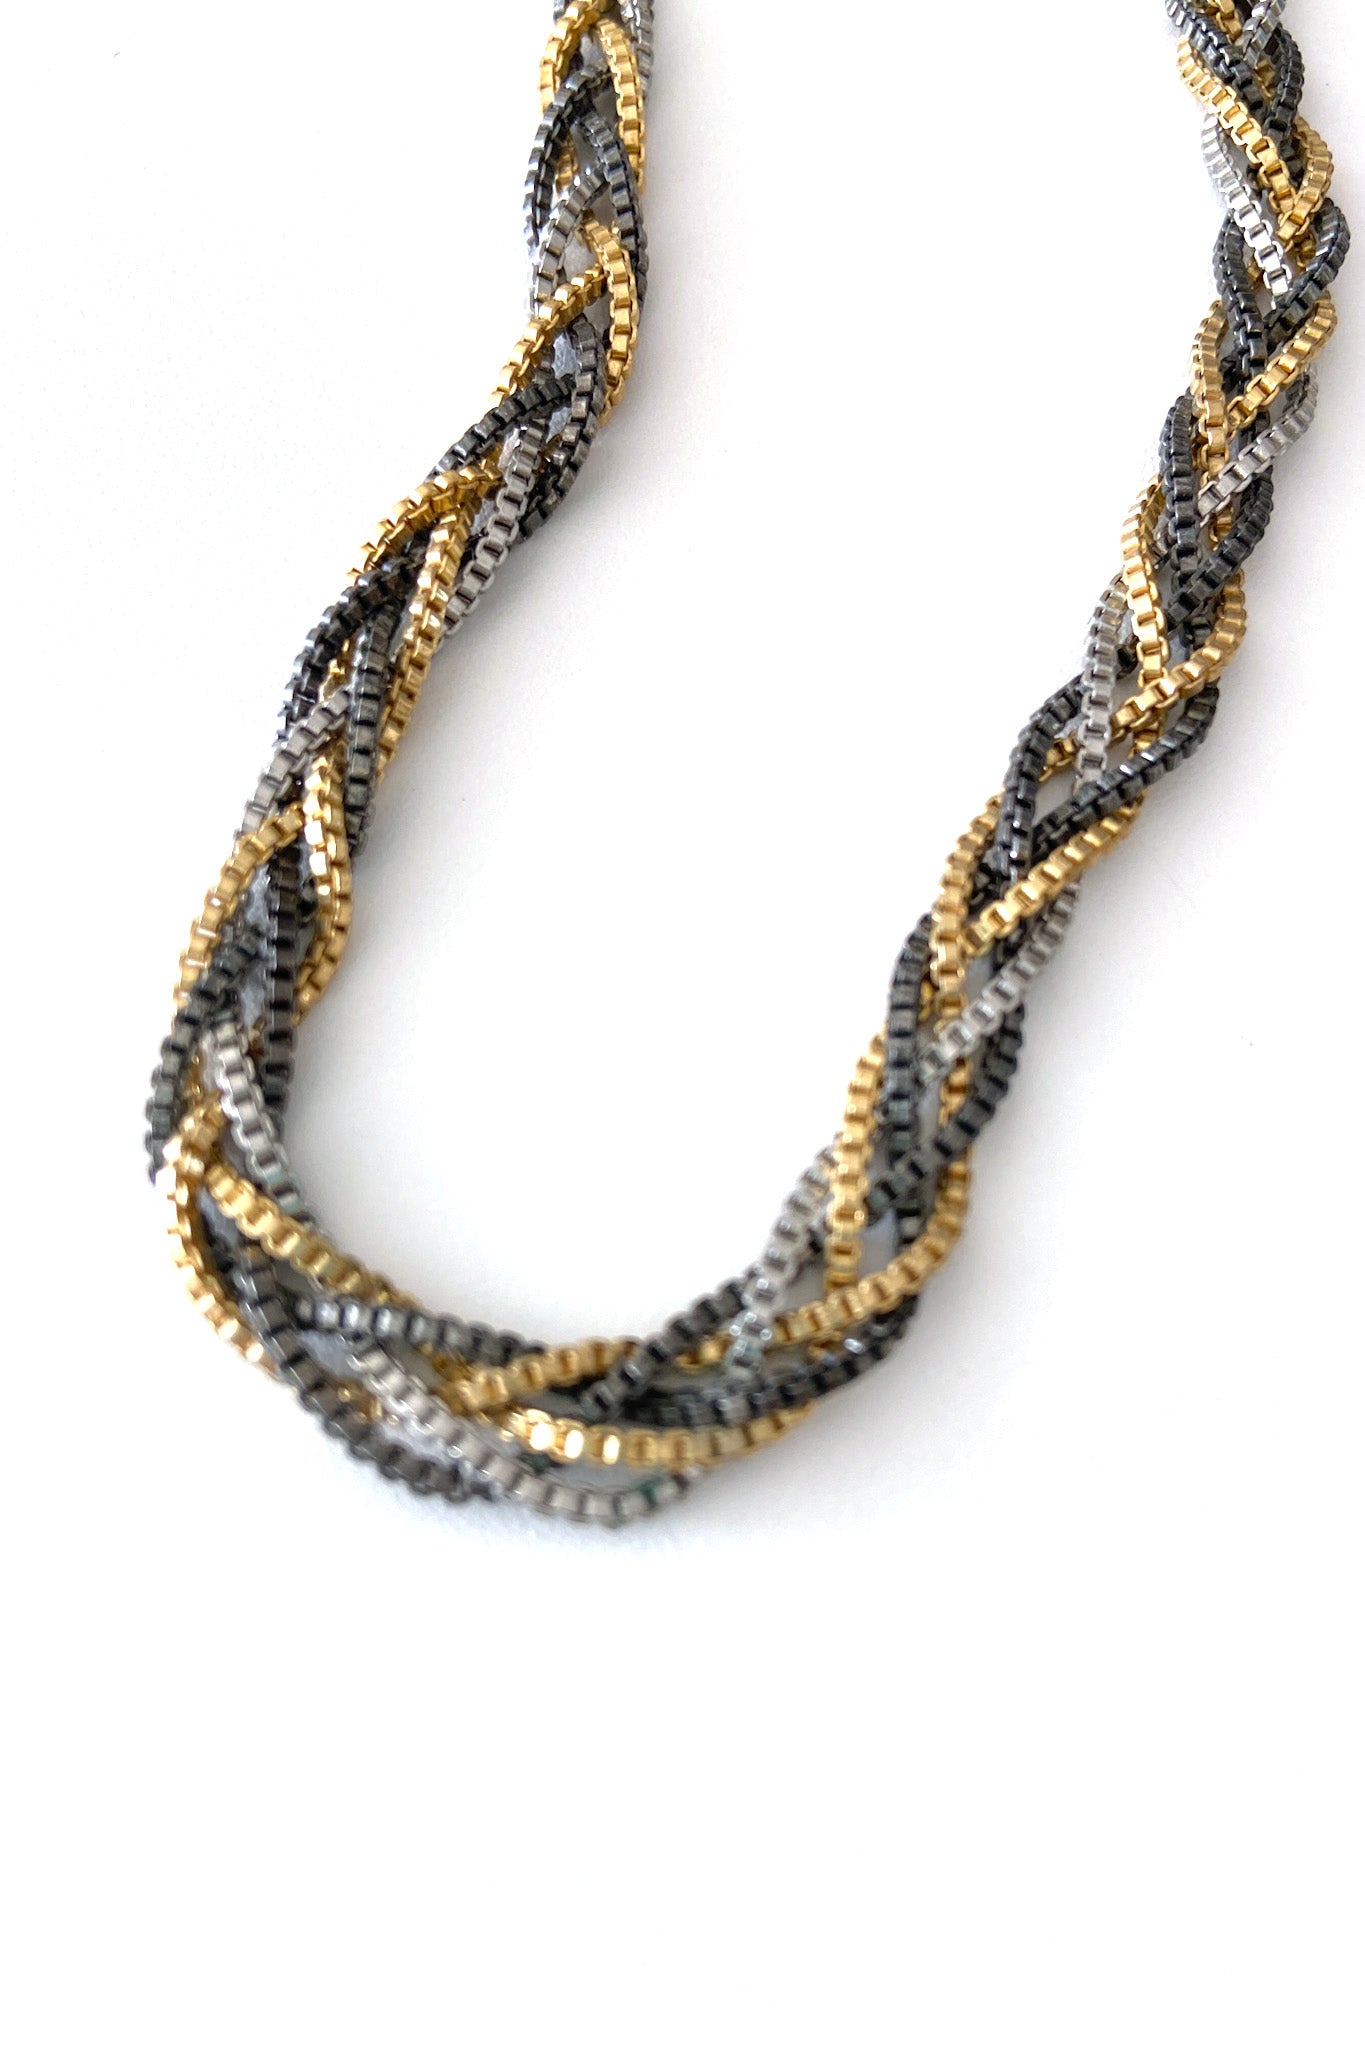 Vintage crossing necklace metal charm